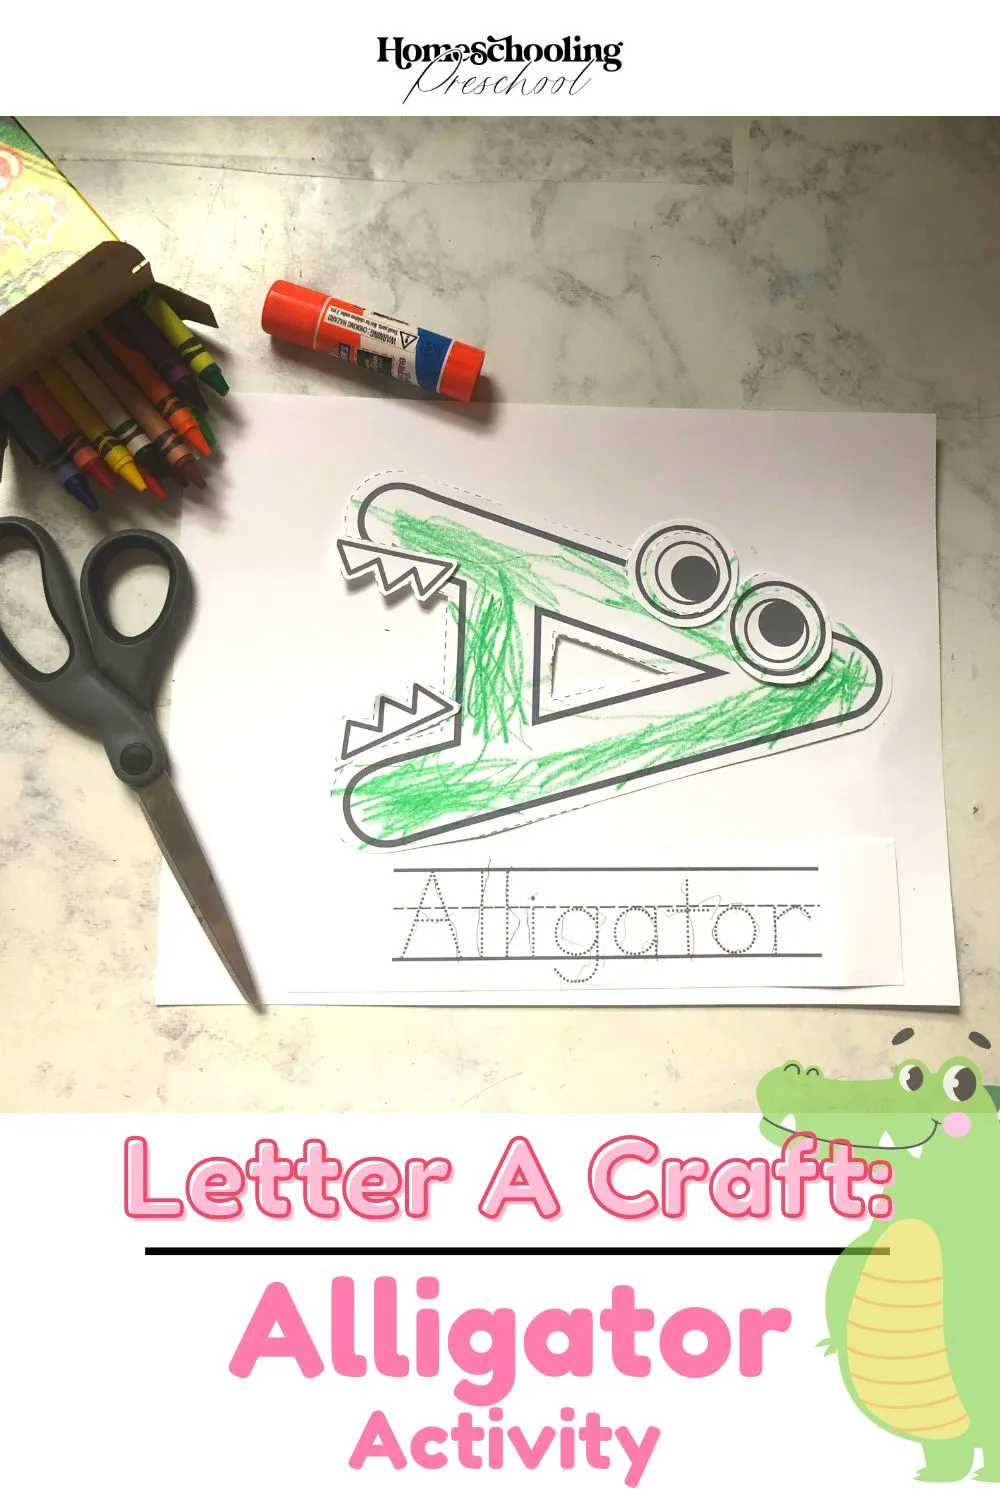 Letter A Craft: Alligator Activity